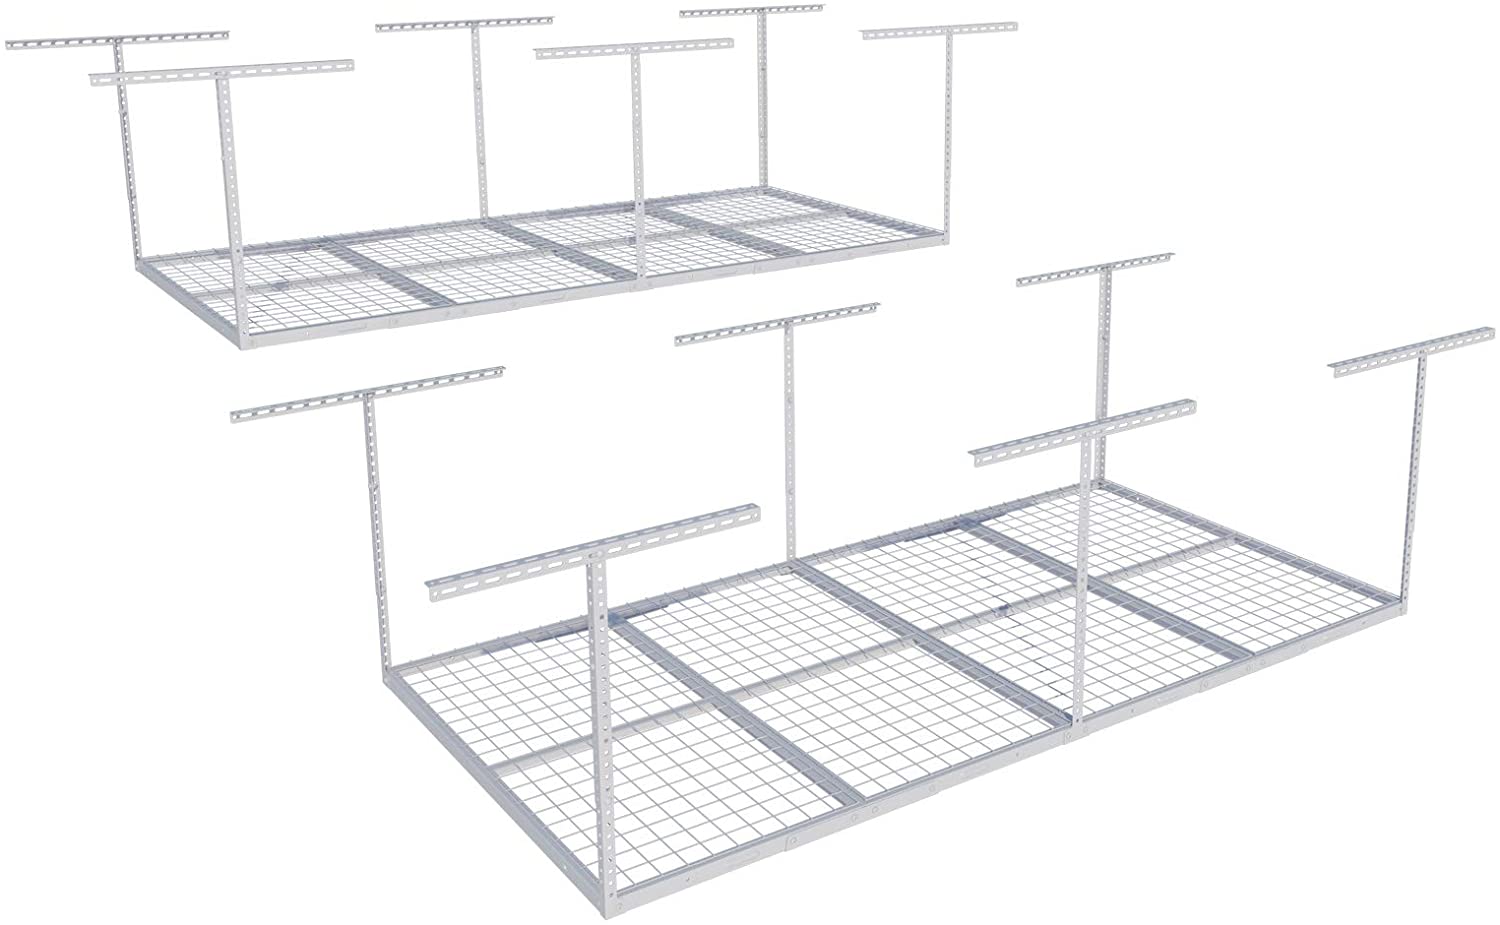 1. Fleximounts overhead storage rack: